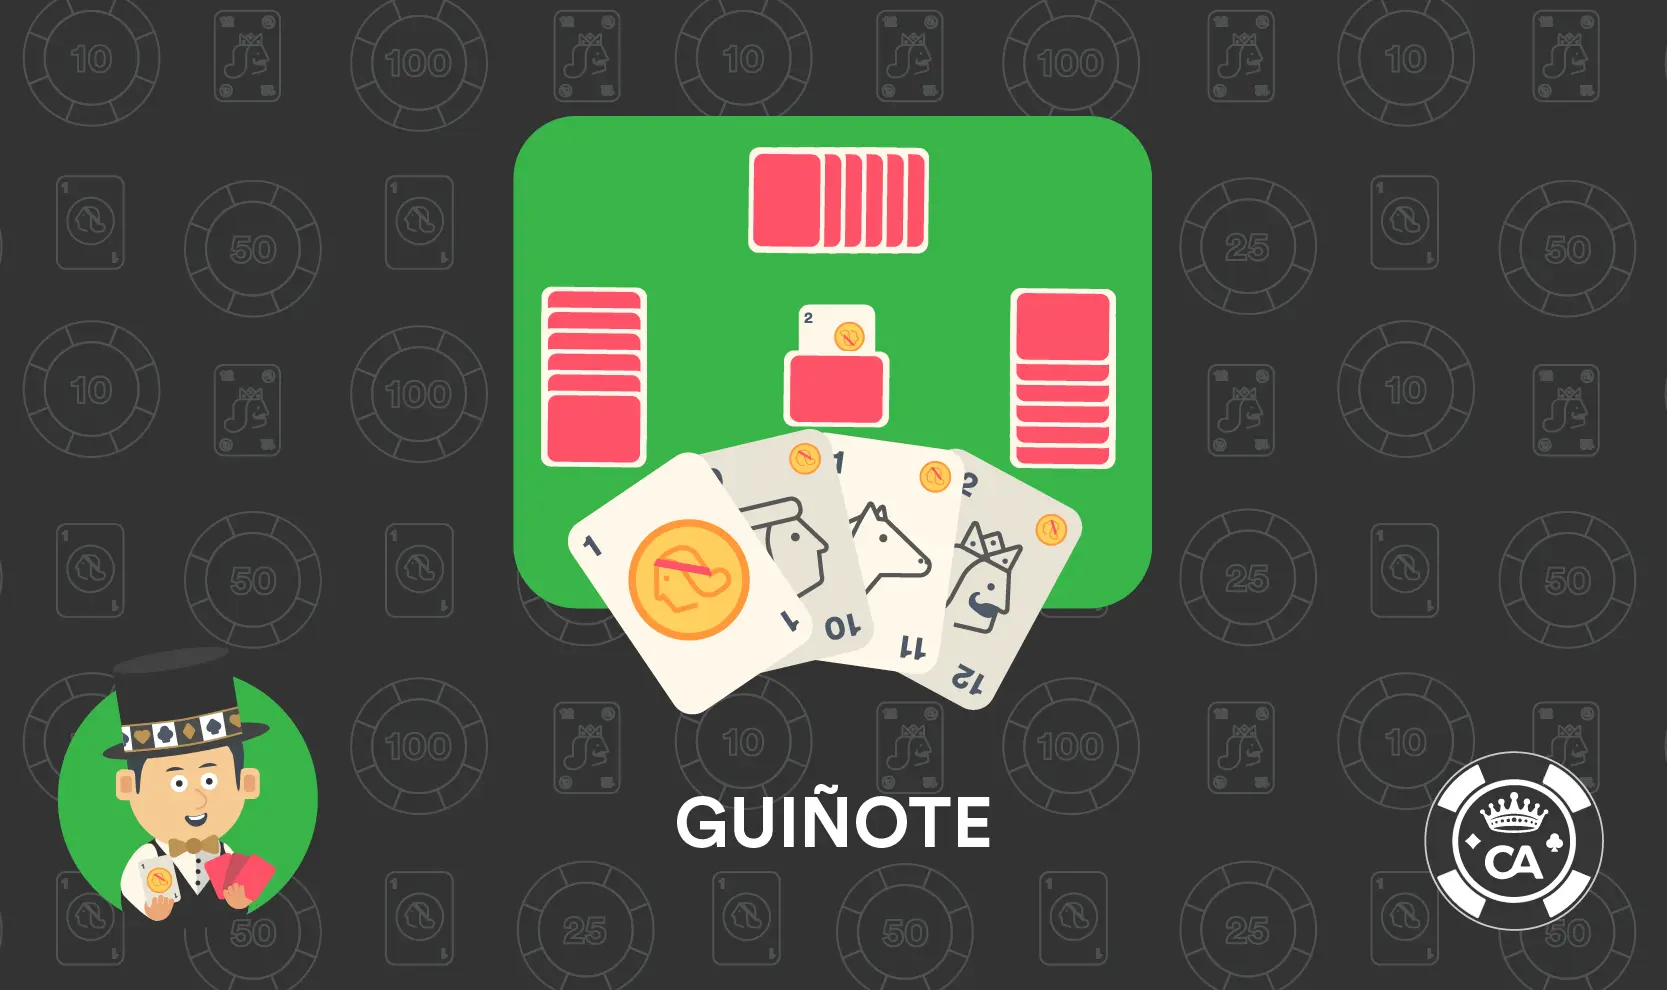 Guiñote